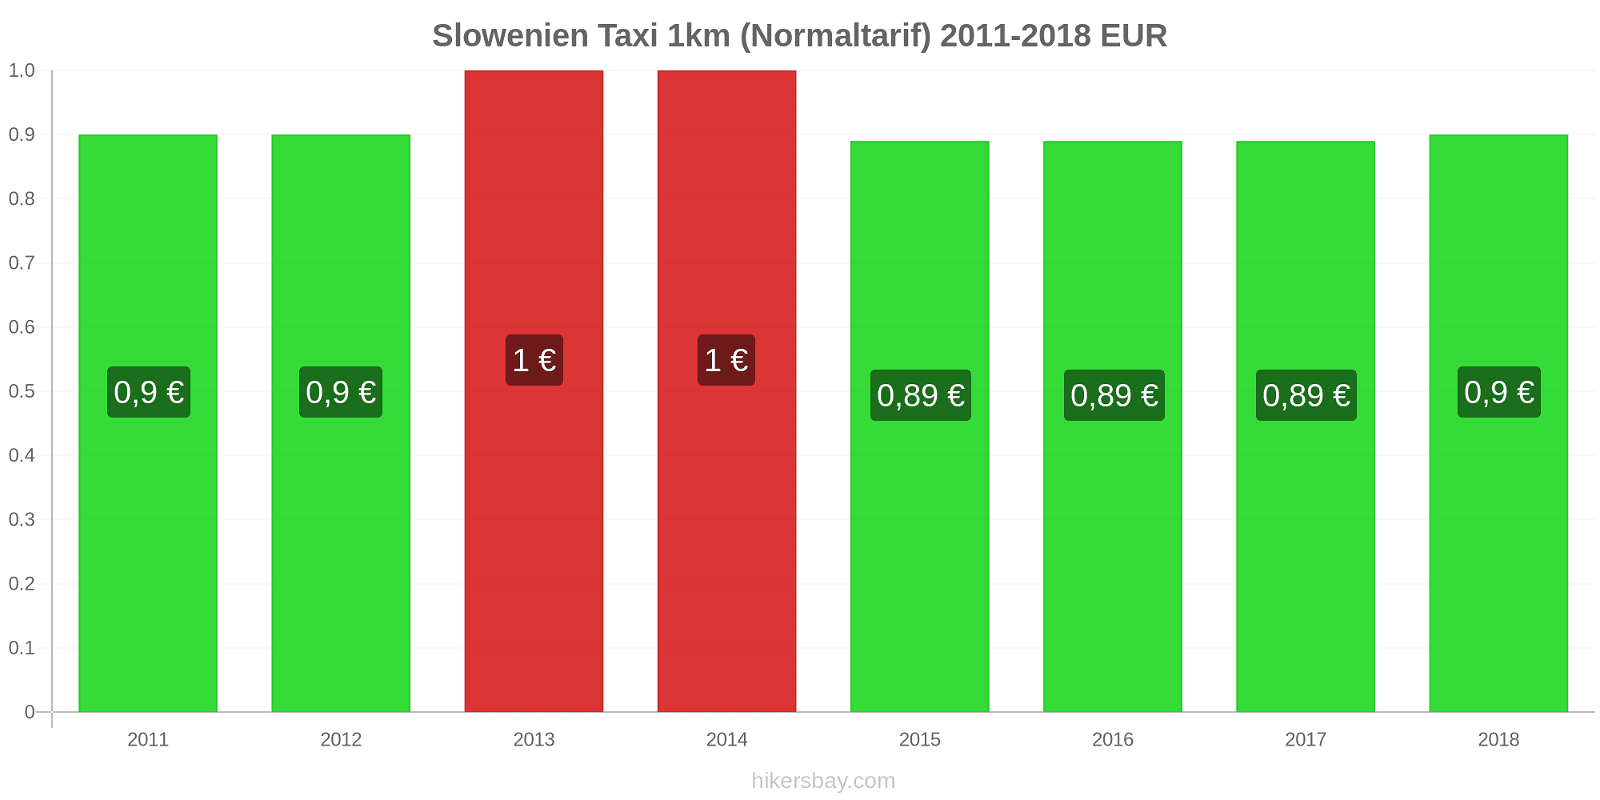 Slowenien Preisänderungen Taxi 1km (Normaltarif) hikersbay.com